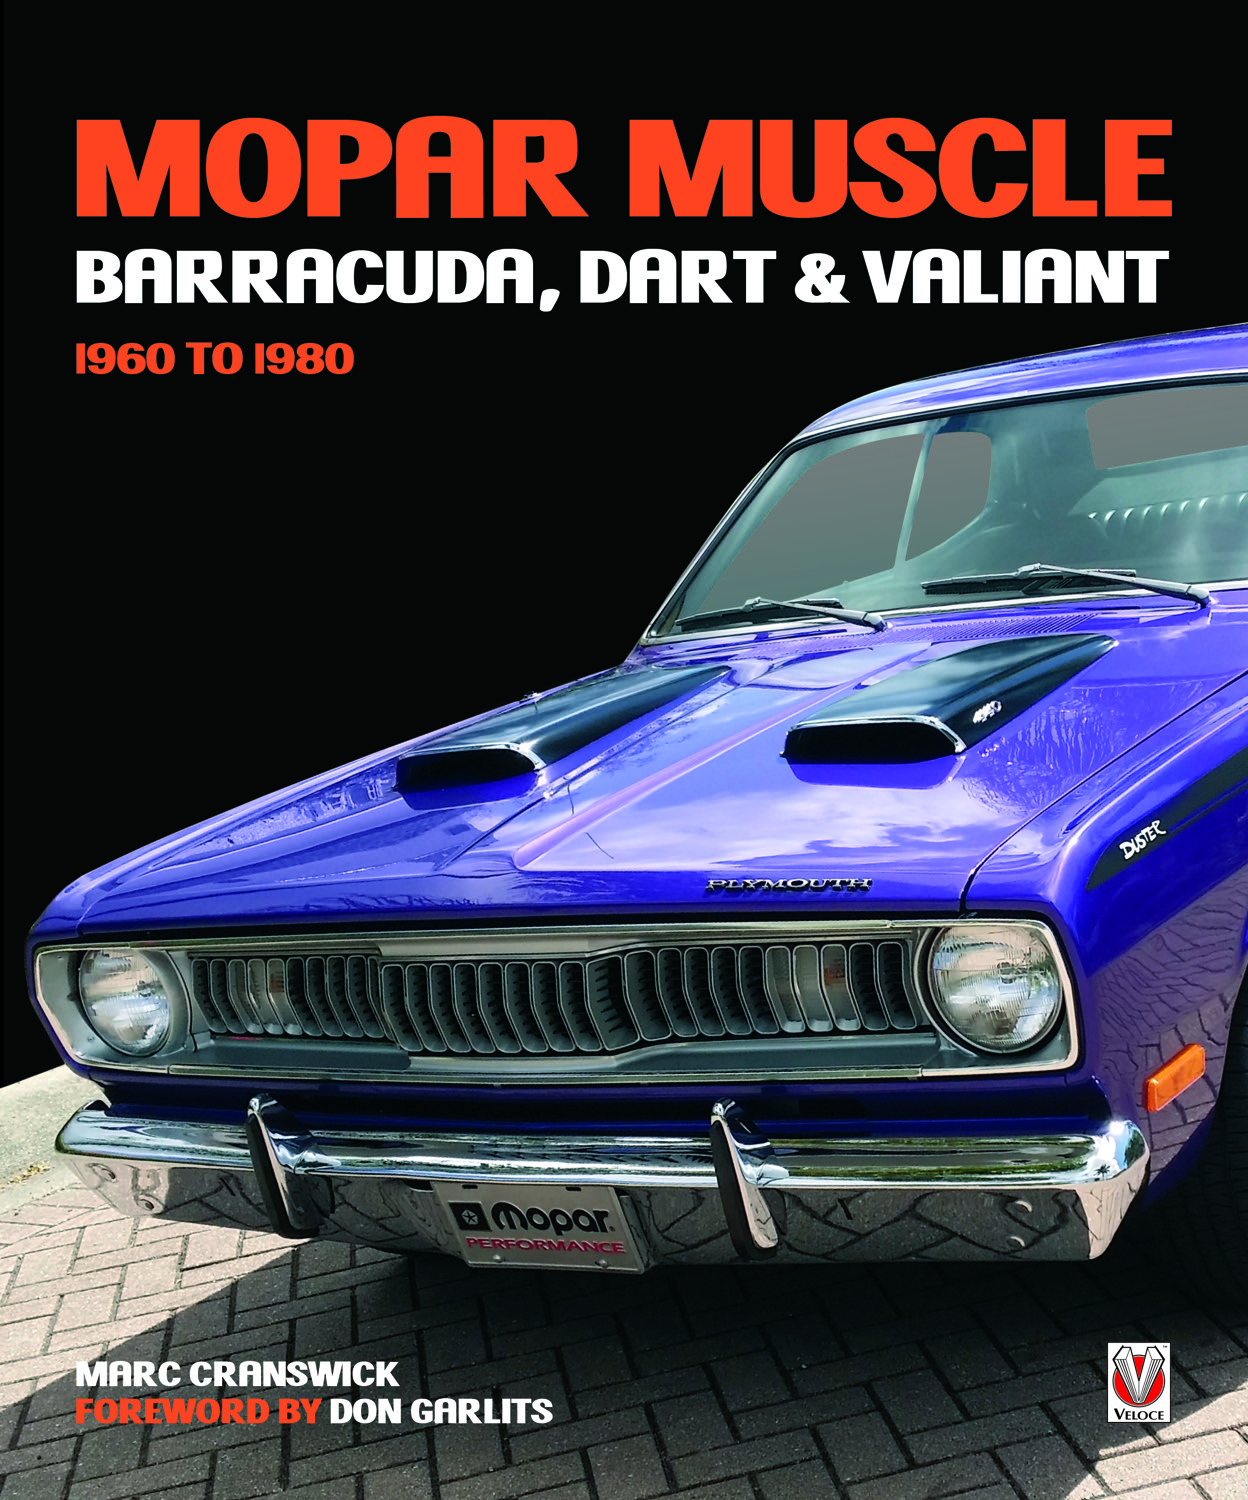 MOPAR Muscle - Barracuda, Dart & Valiant 1960-1980 by Marc Cranswick